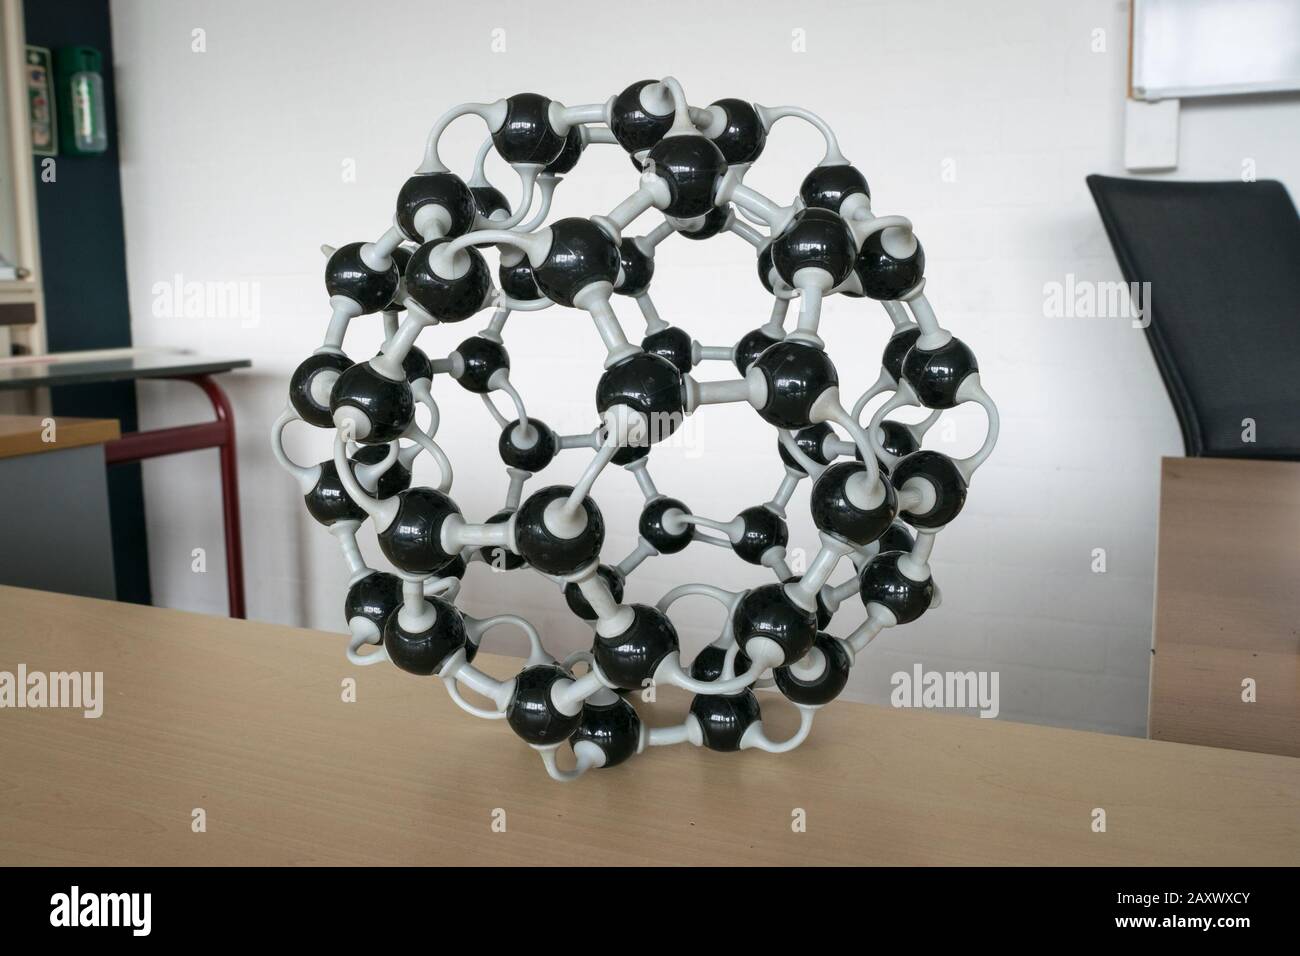 3-D-Modell des Kohlenstoffmoleküls (C60), auch bekannt als Fullerene oder Buckminsterfullerene. Fußball-förmiges Molekularmodell, das in der Chemie- oder Biologieklasse verwendet wird Stockfoto